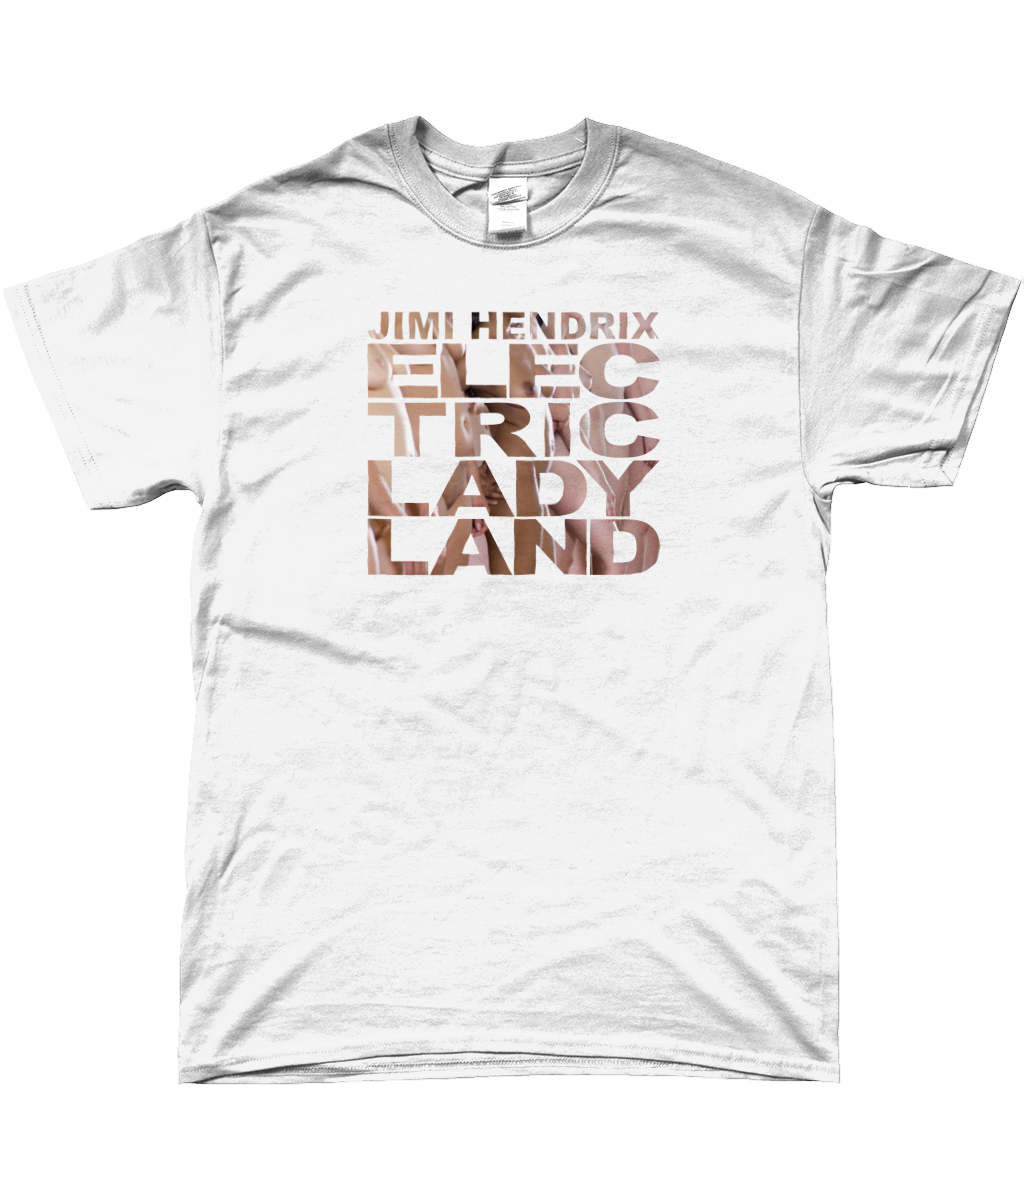 Jimi Hendrix, Electric Ladyland, T-Shirt, Men's